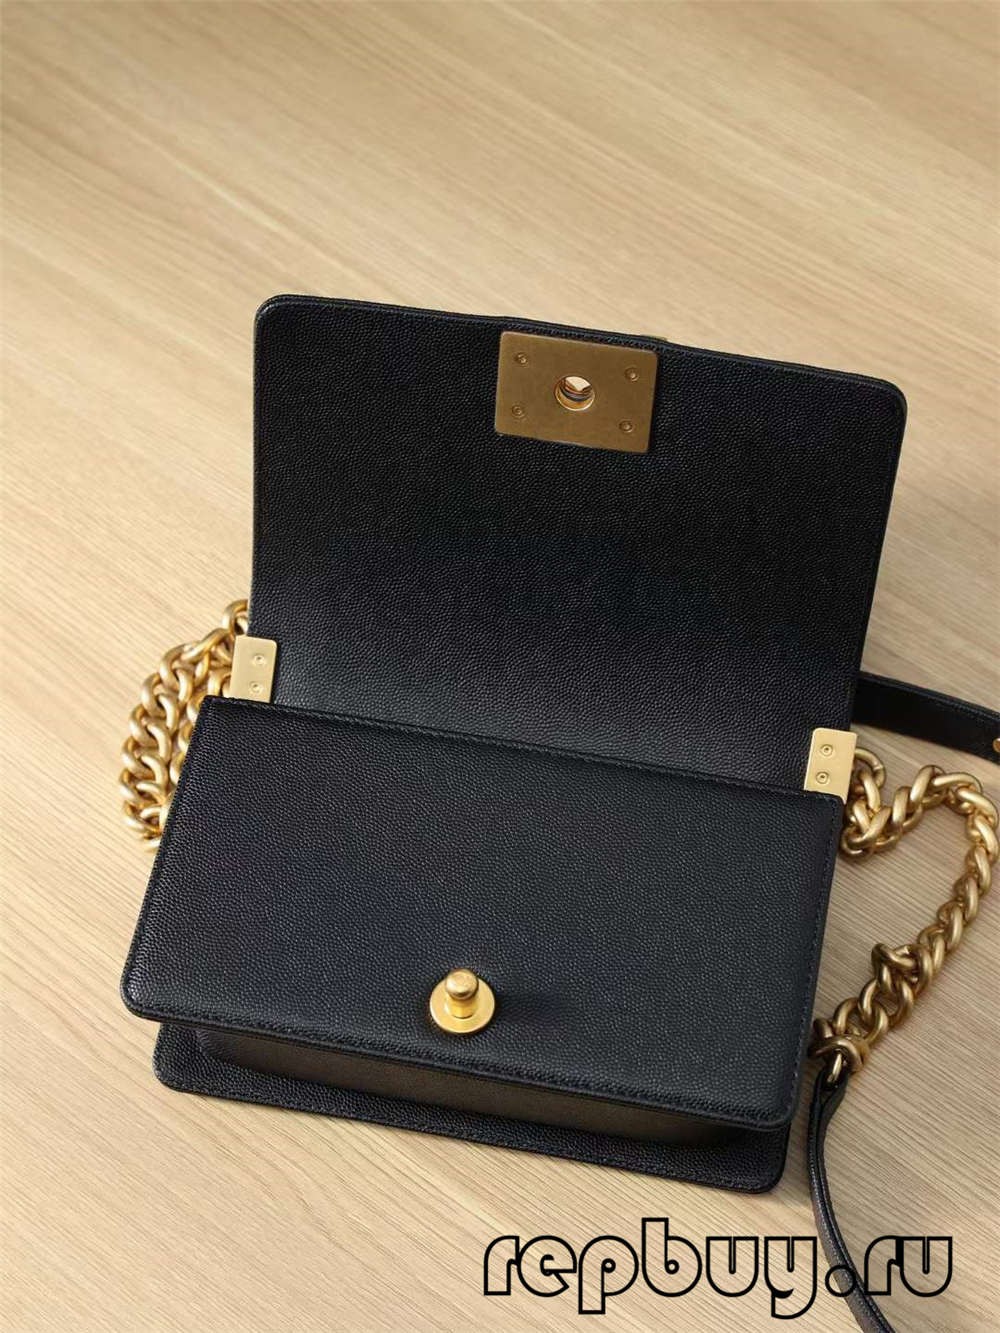 Chanel Le boy top replica handbags small gold buckle inner label and logo details (2022 Latest)-Best Quality Fake designer Bag Review, Replica designer bag ru